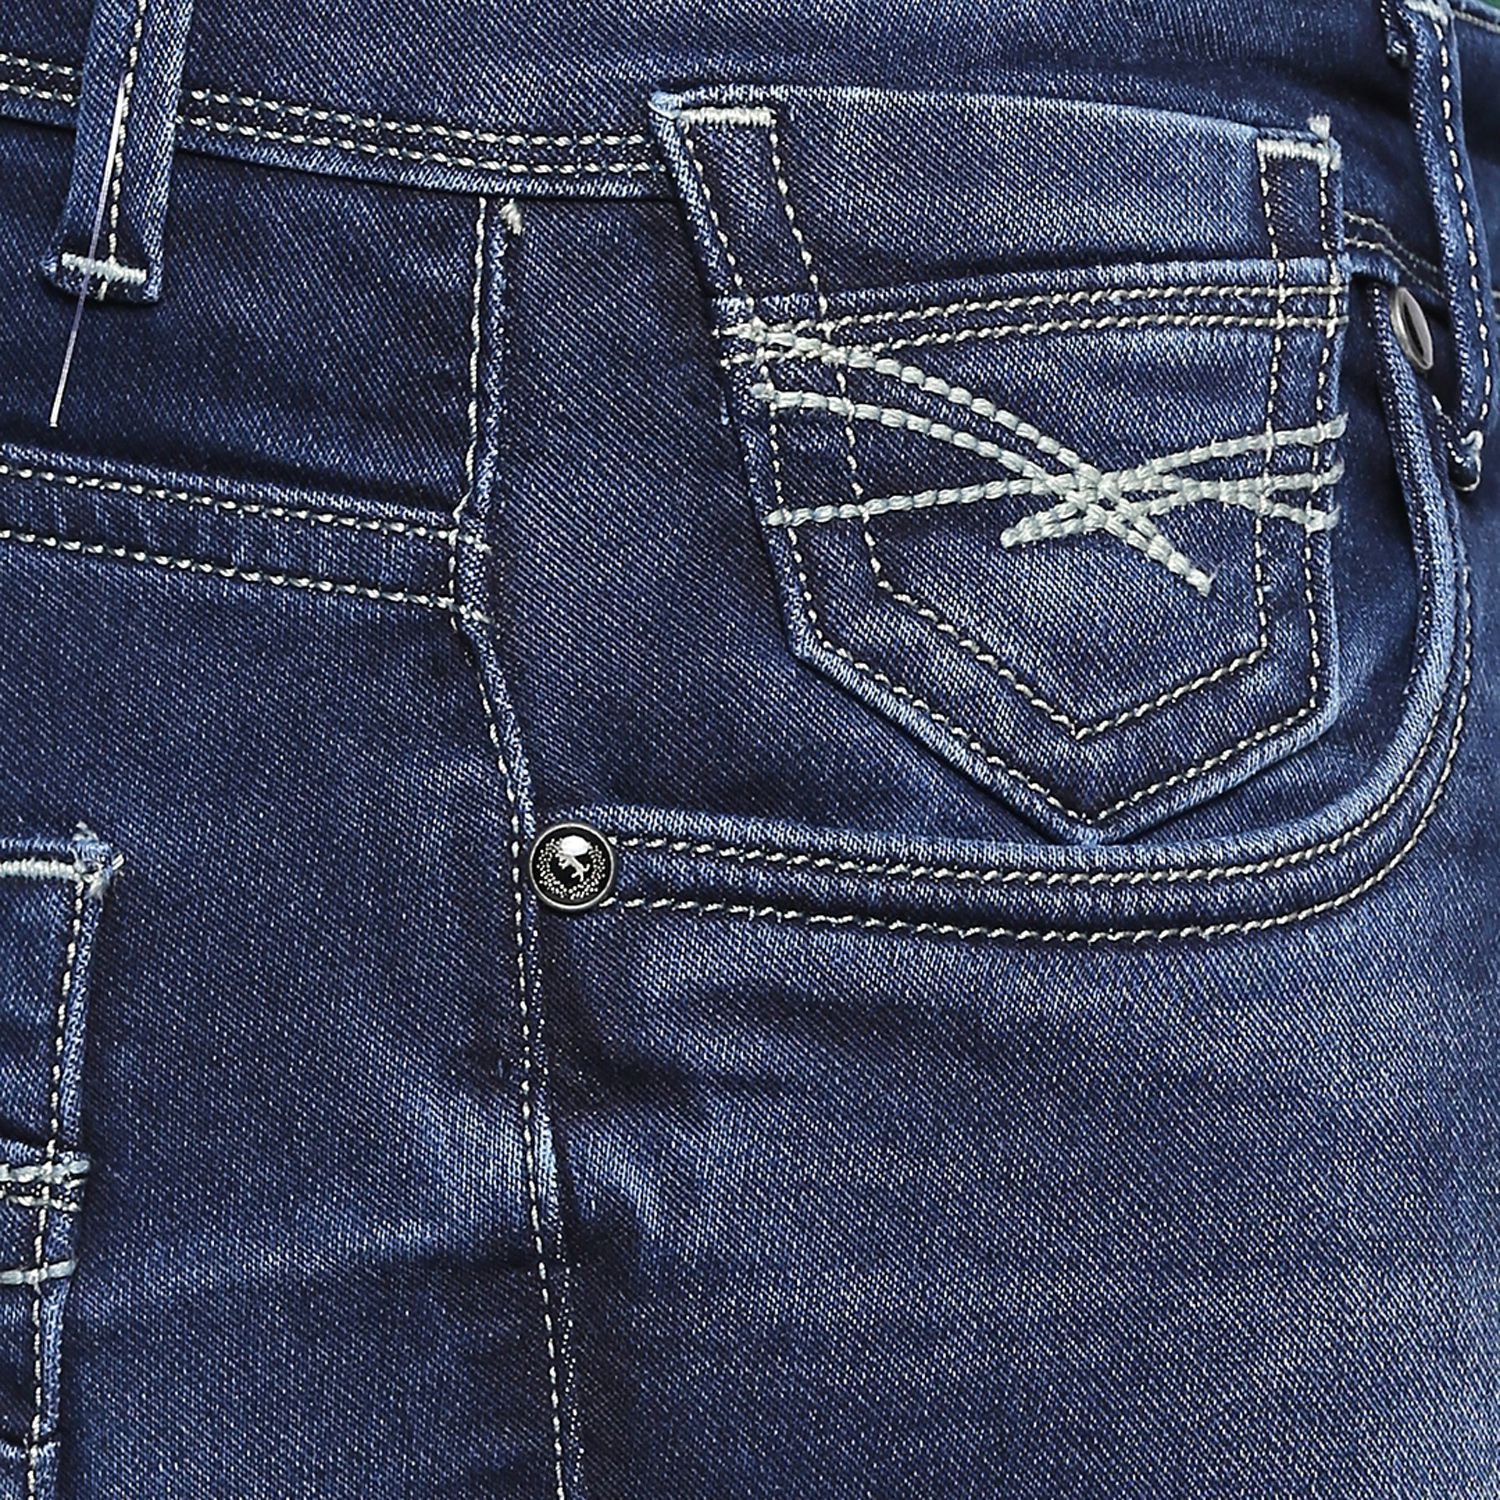 D'COT Blue Regular Fit Jeans - Buy D'COT Blue Regular Fit Jeans Online ...